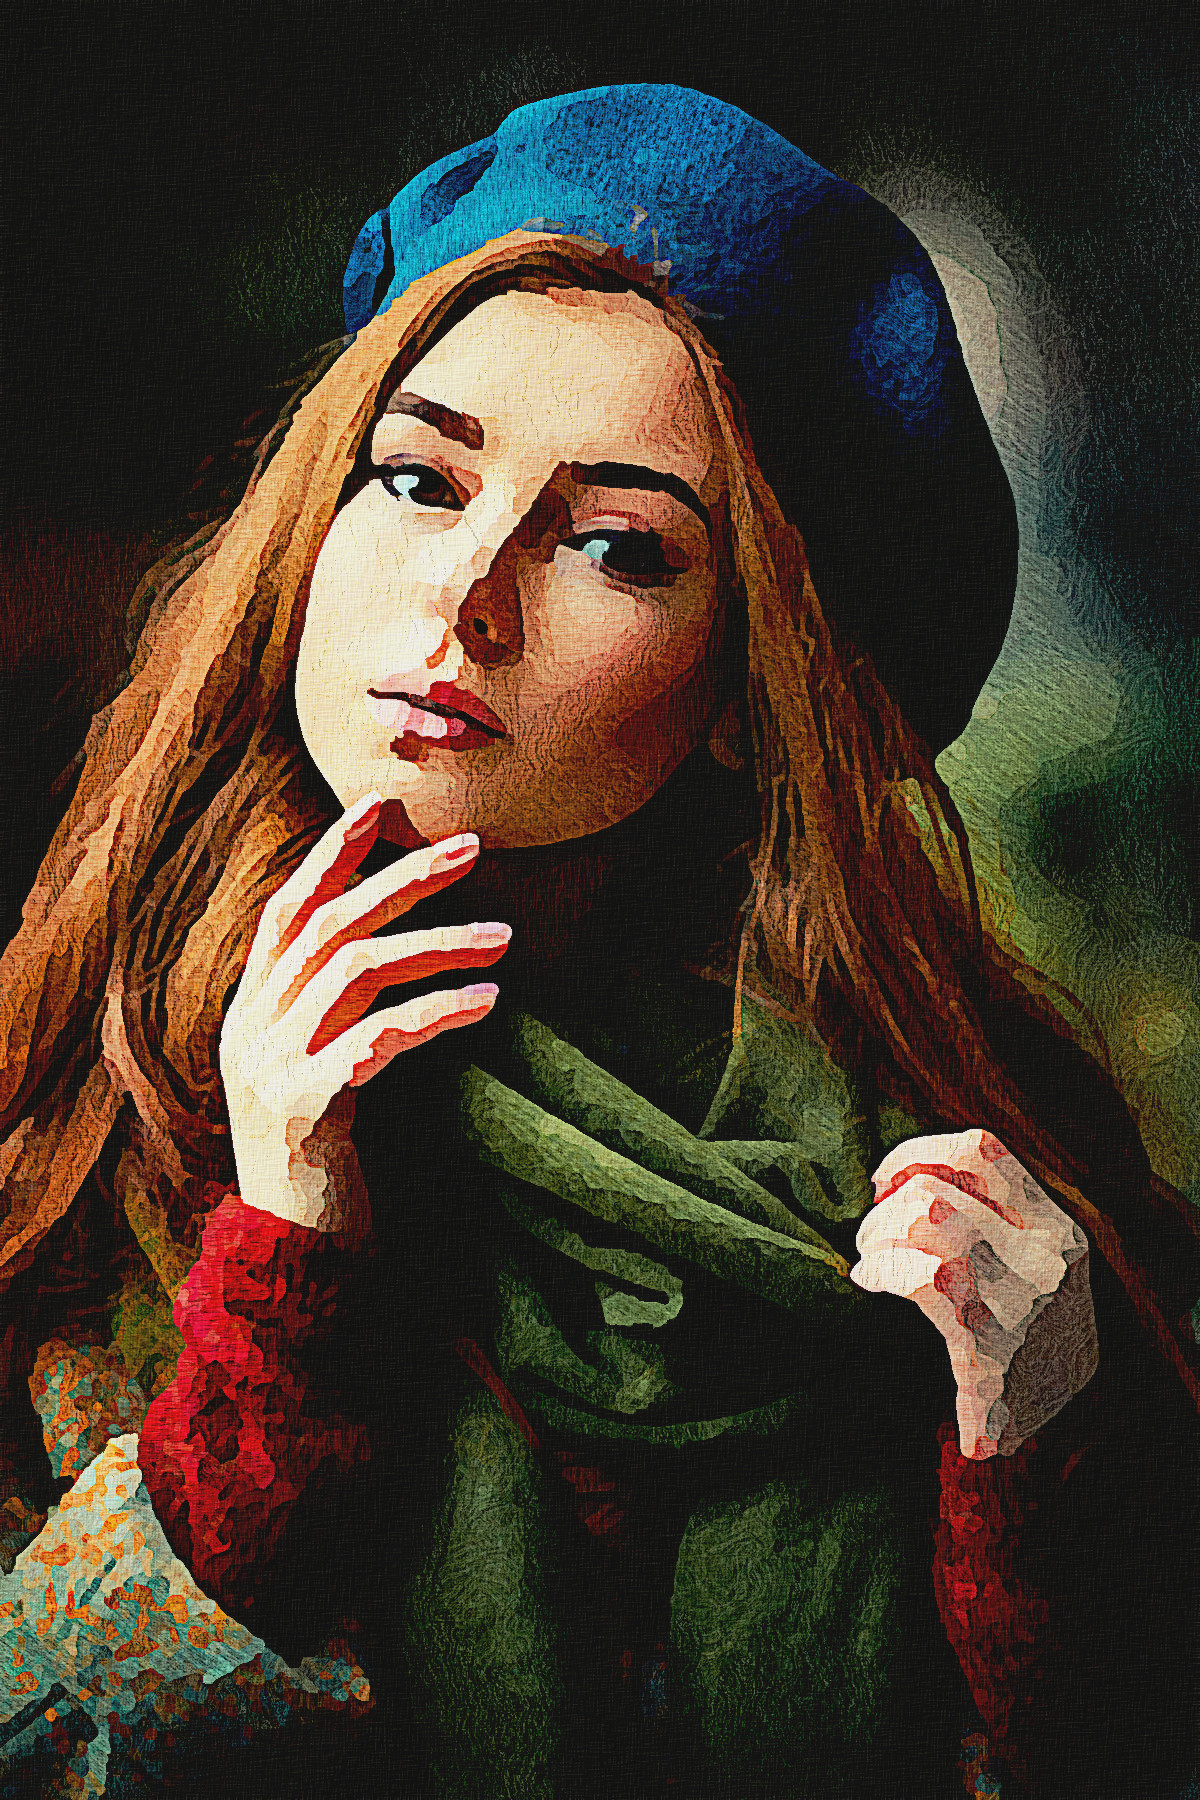 alexandra_by_olgaboyko_dc7rd0p_DeviantArt__DN-Artistic-FreePainting-FPSgray, 20 colours, texture soft.jpg